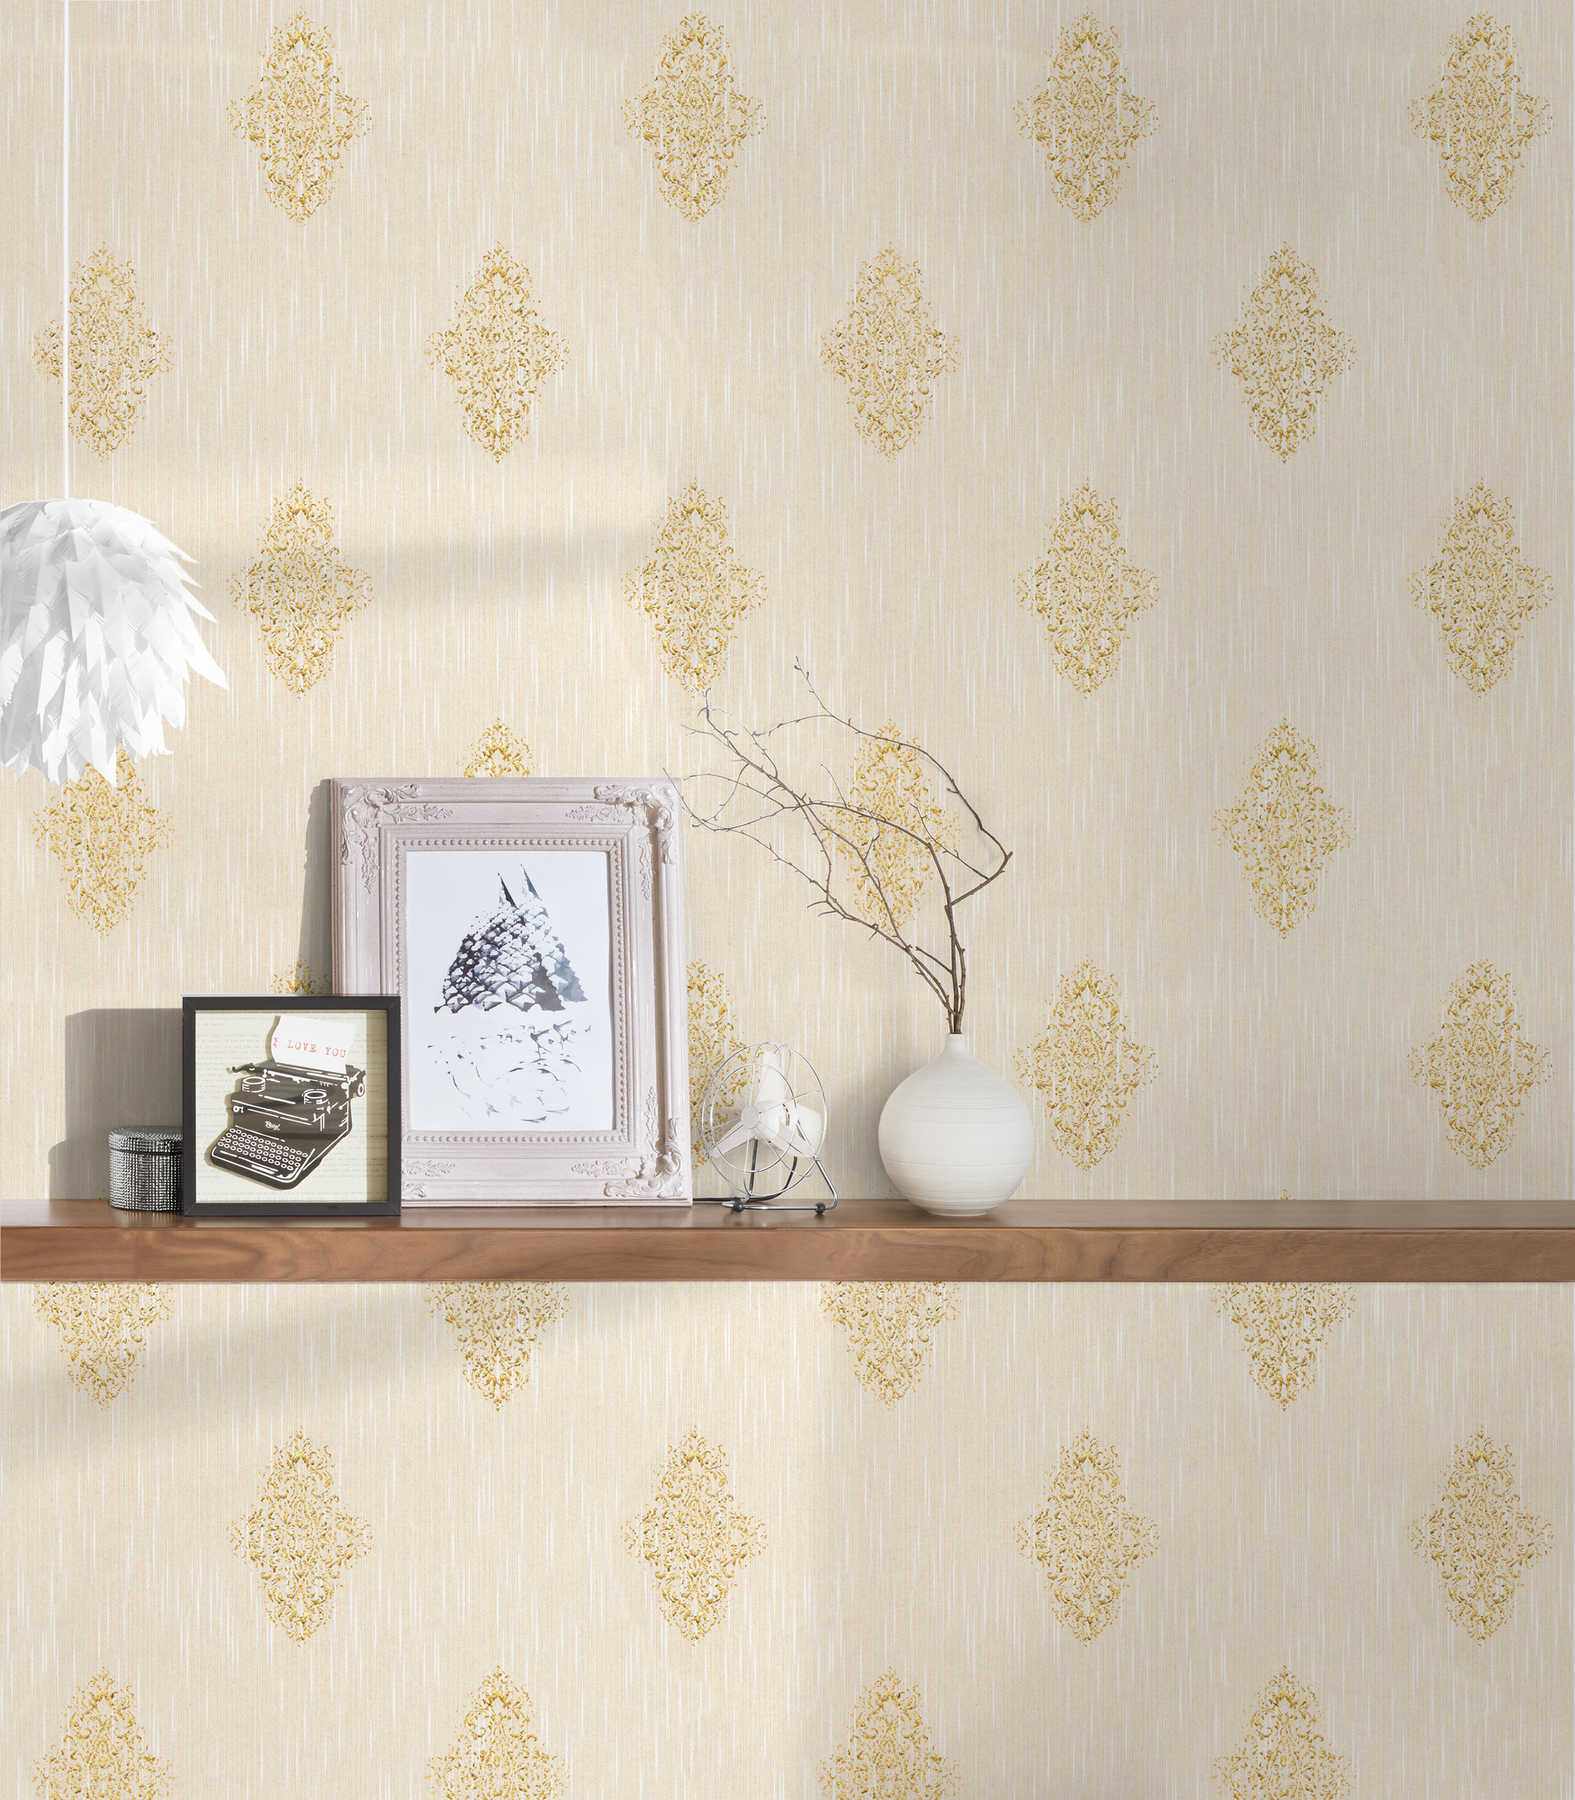             Wallpaper ornament design in used look, metallic effect - cream, gold
        